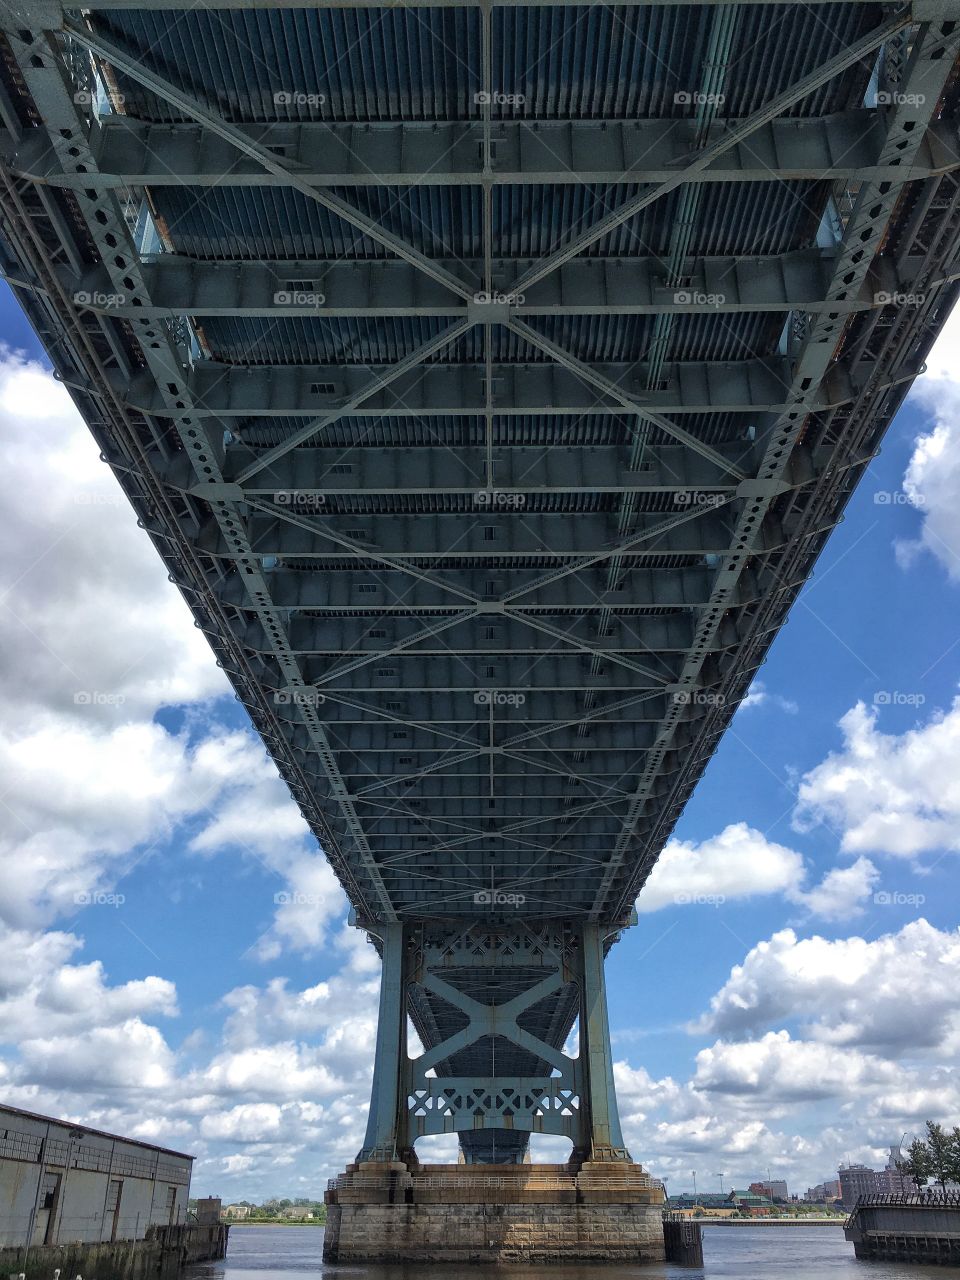 Underneath the bridge